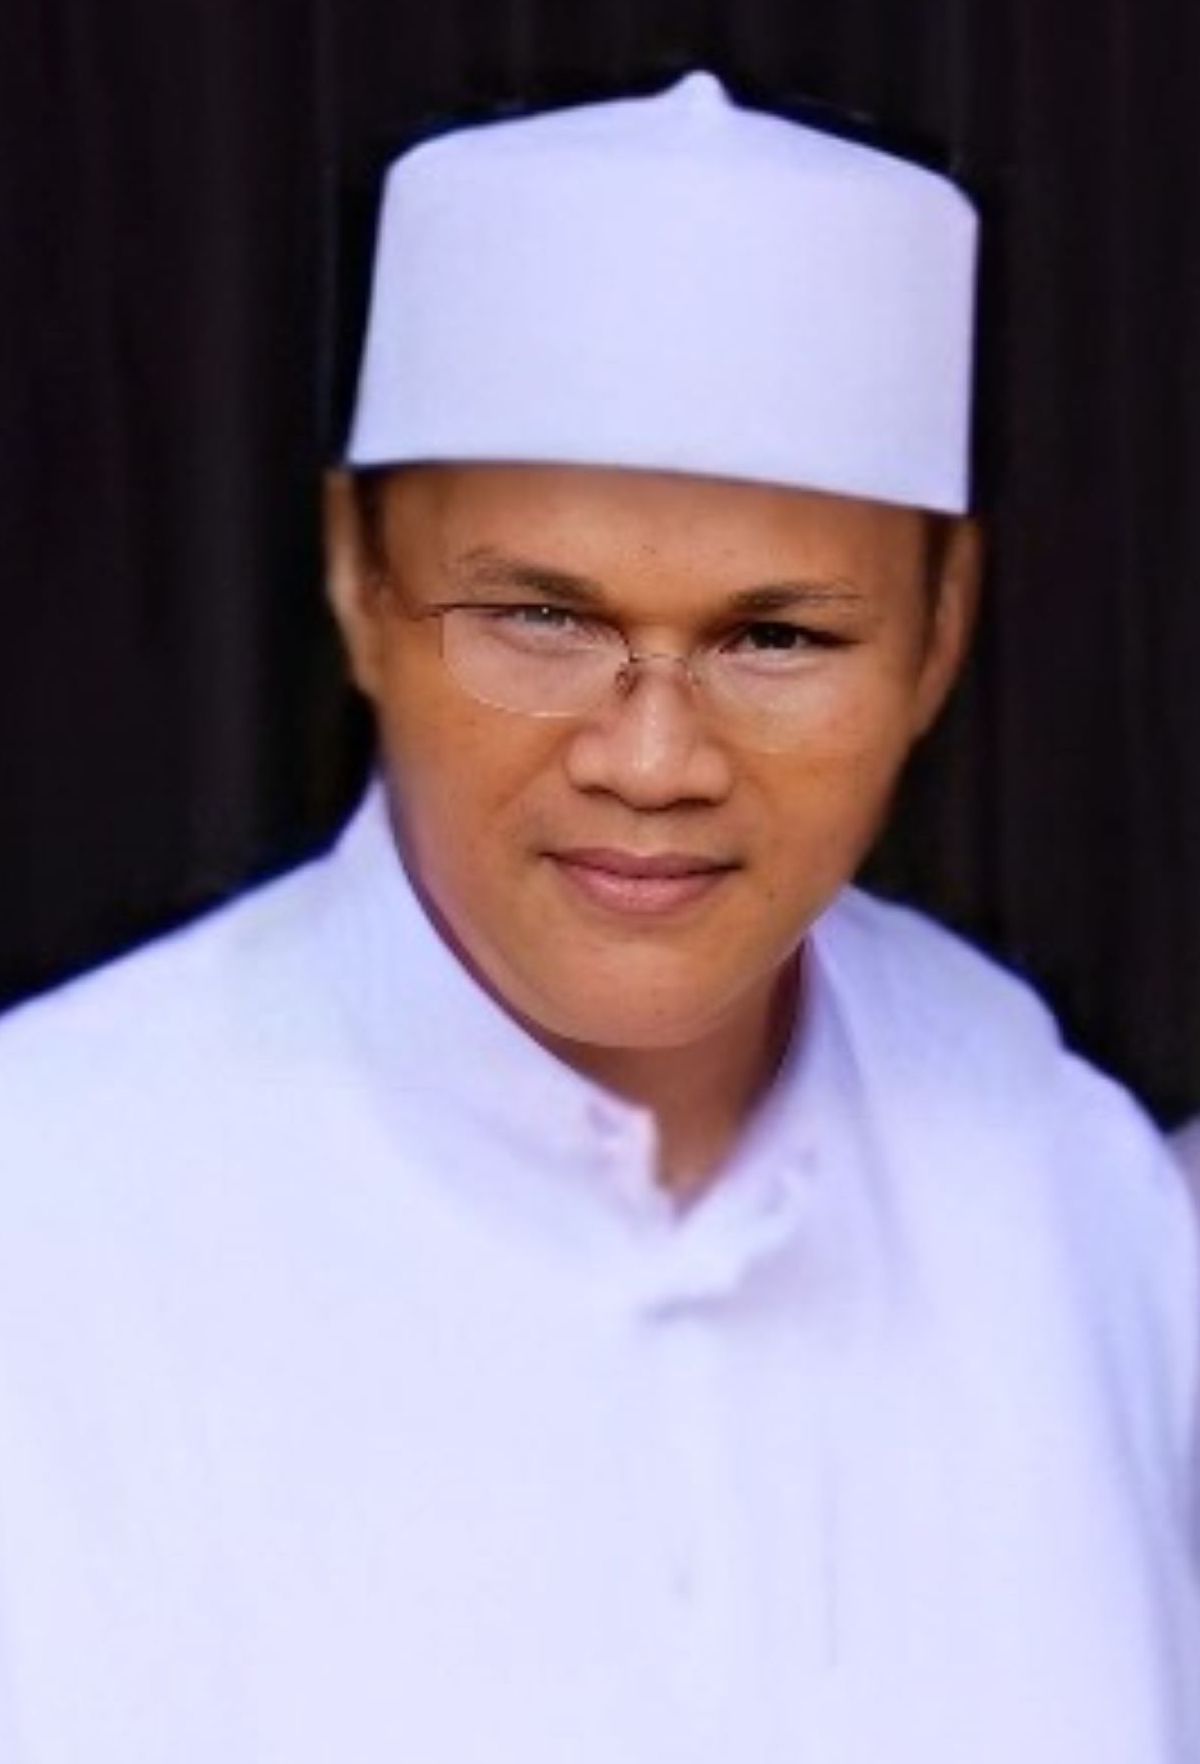 KH Zam Zami Chasan Ketua Umum MUI Kecteamatan Jatiwangi Kabupaten Majalengka terpilih